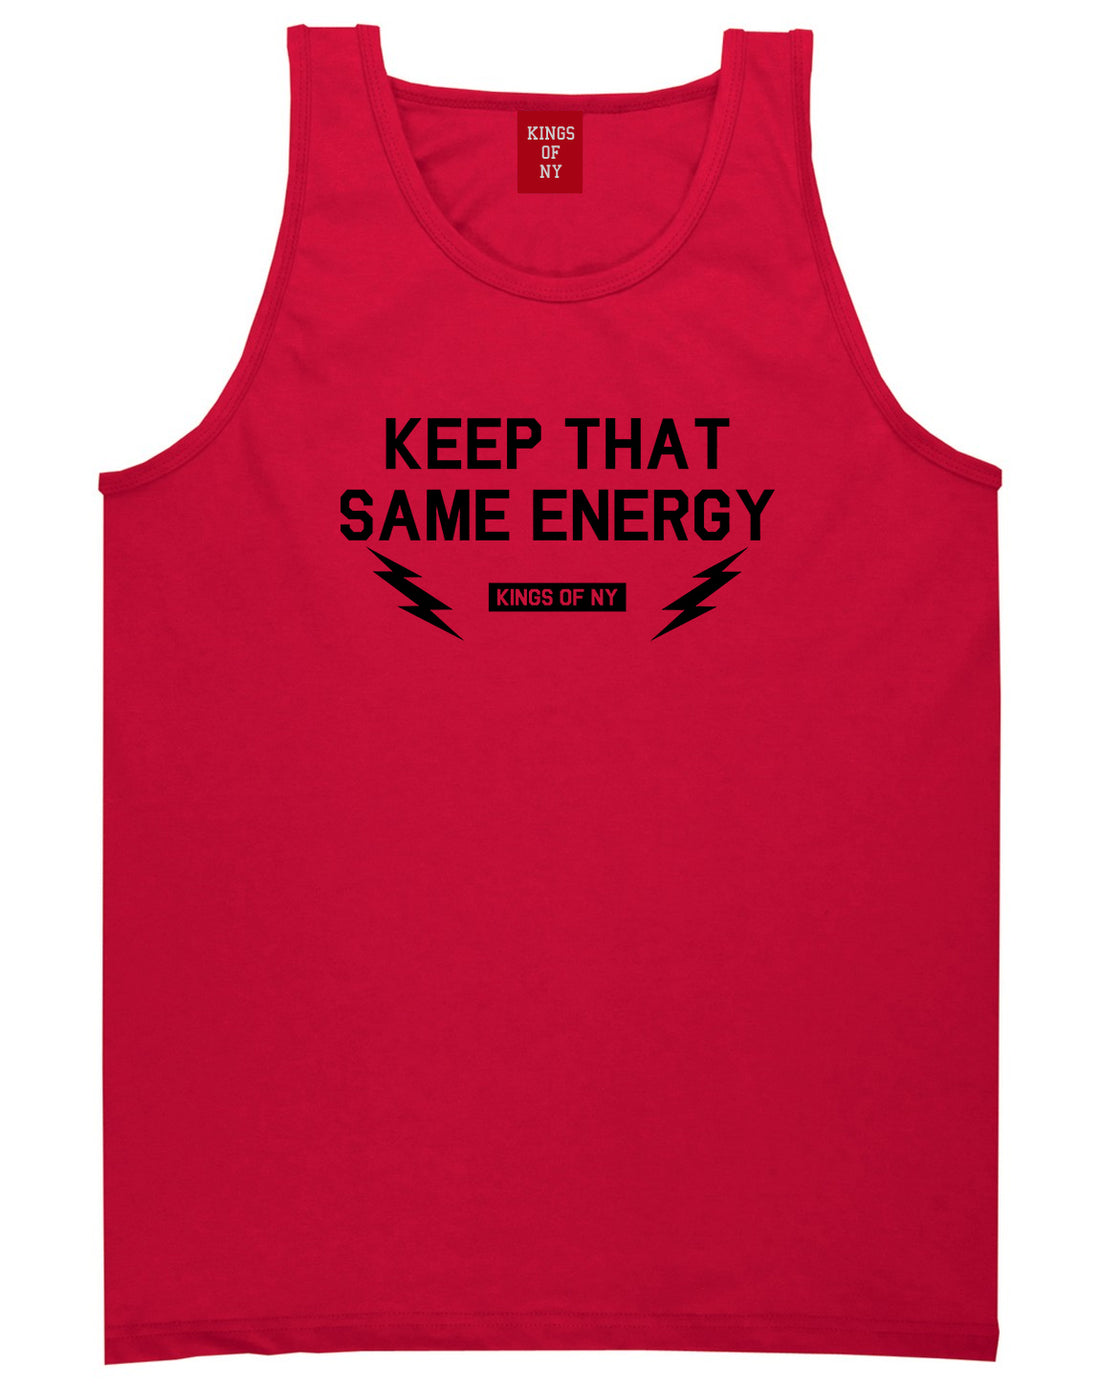 Keep That Same Energy Mens Tank Top Shirt Red